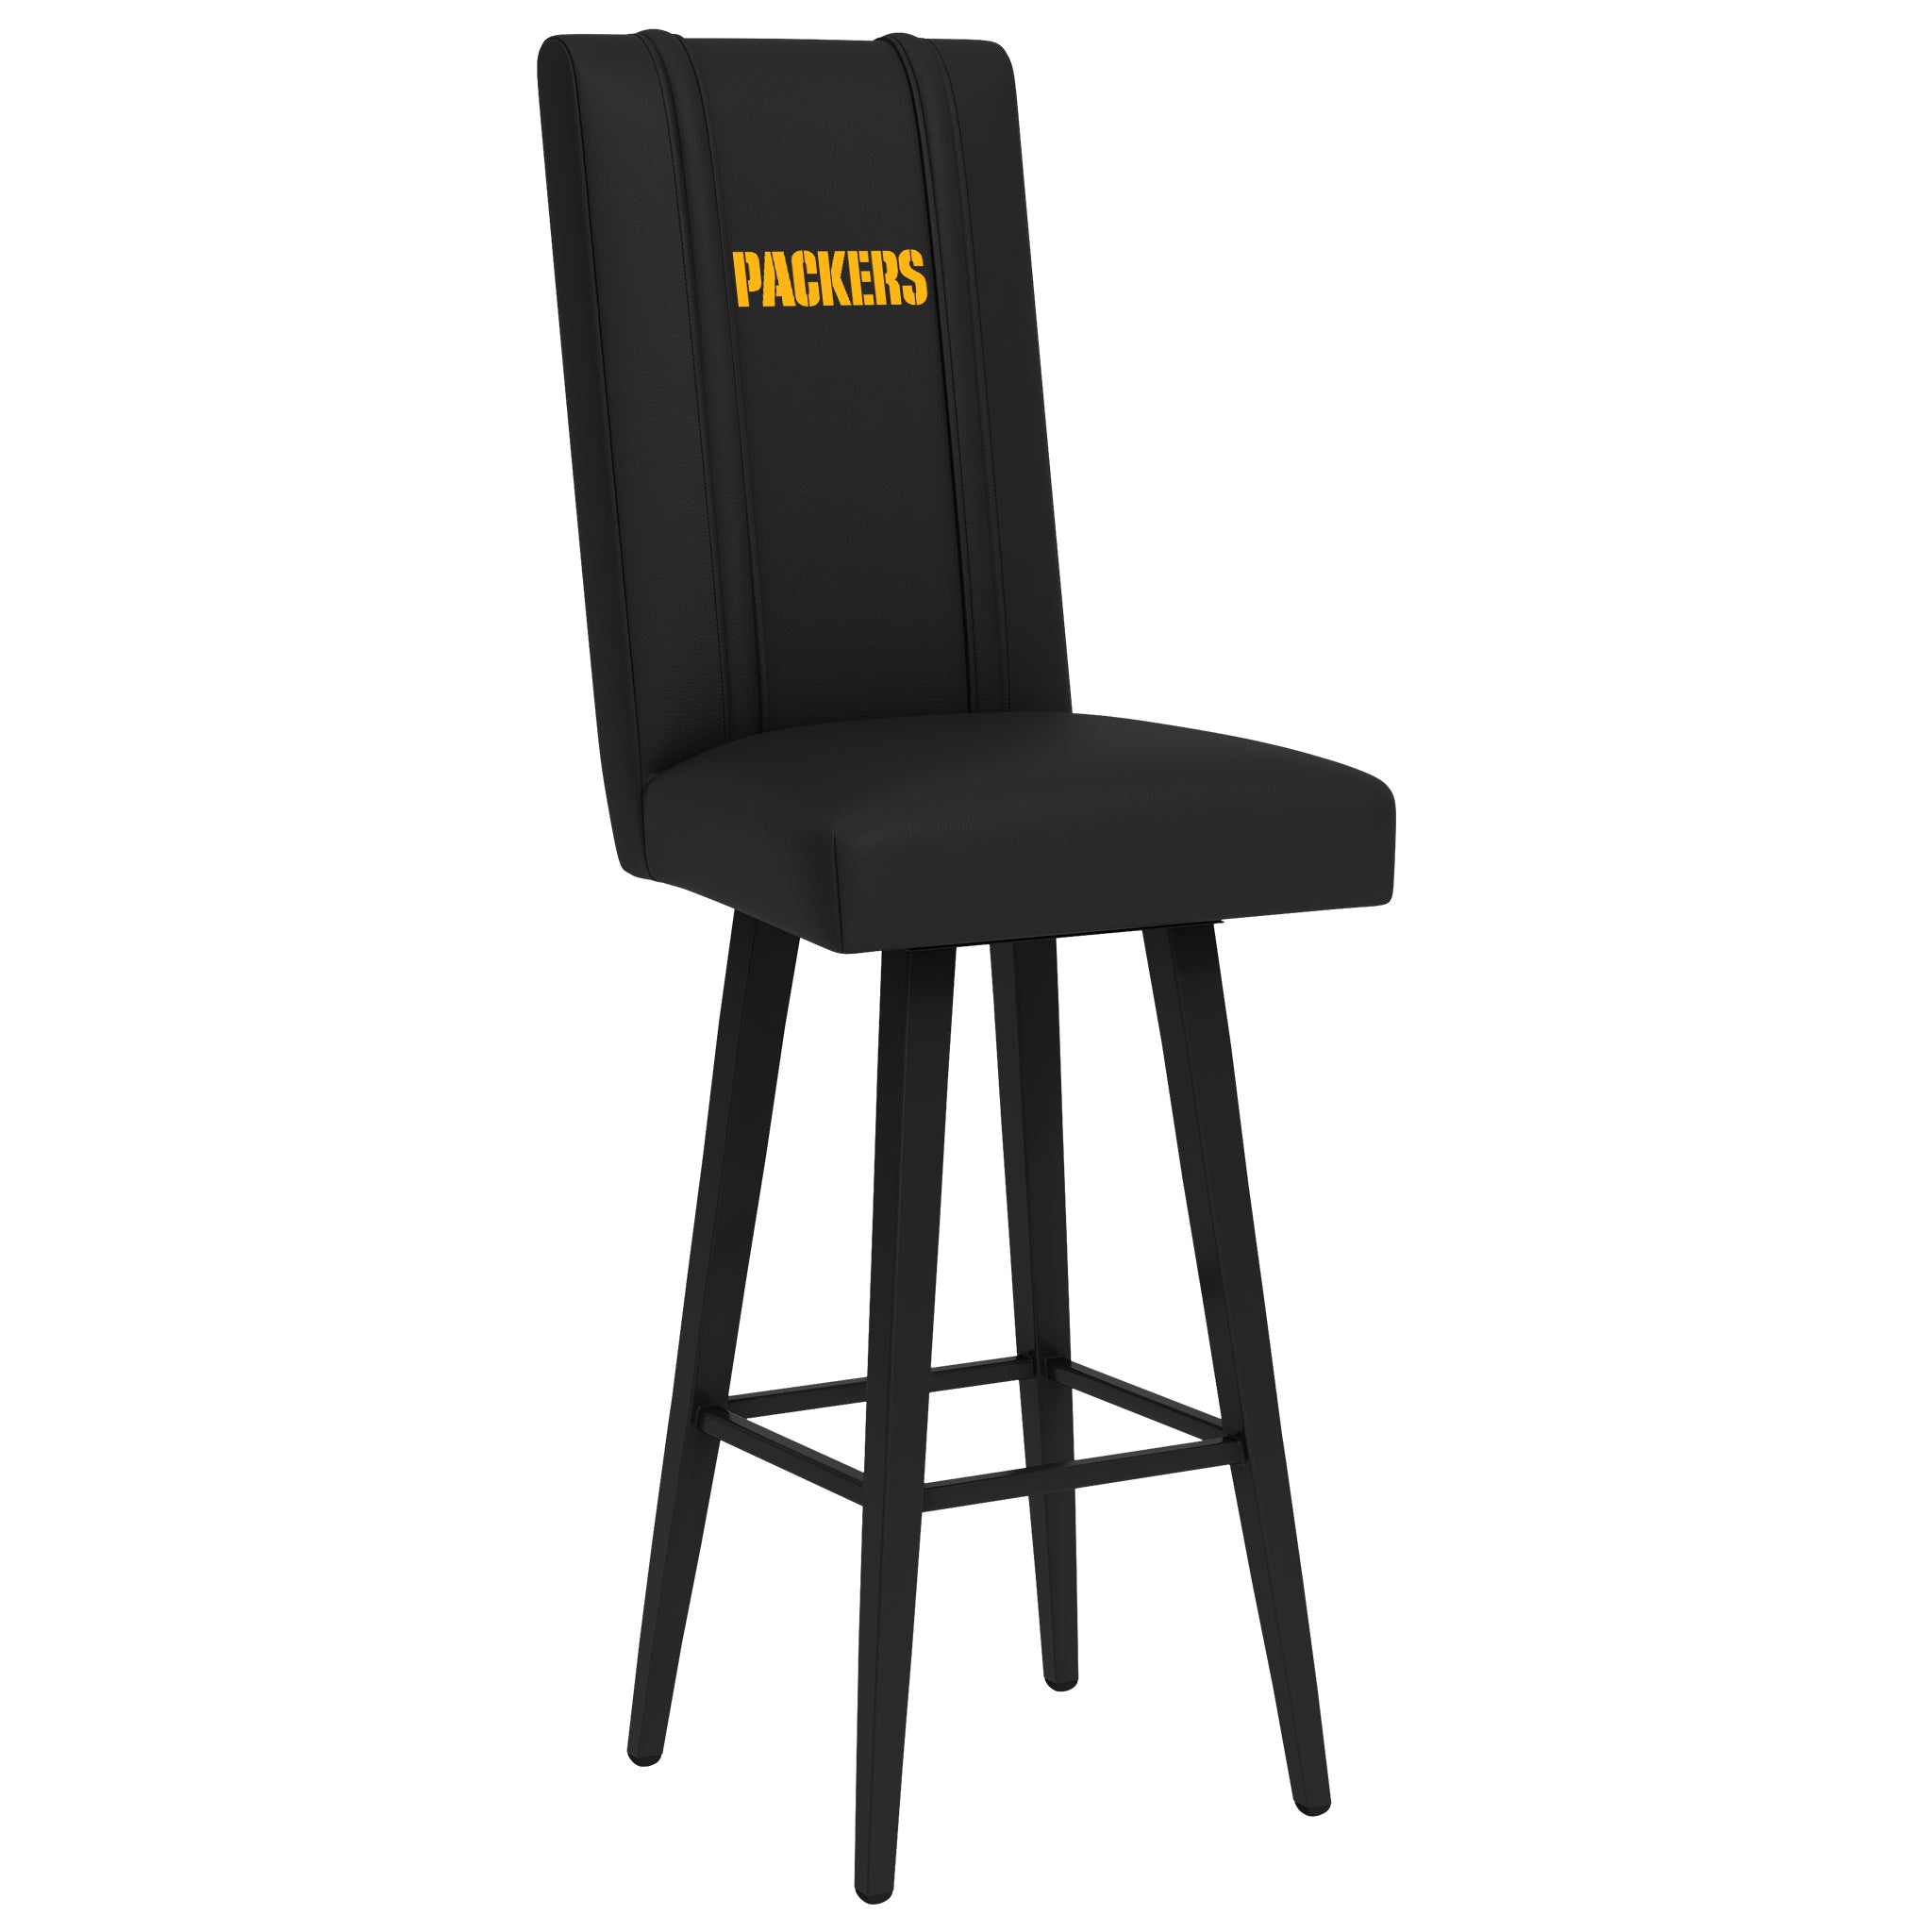 Green Bay Packers Swivel Bar Stool - Chair - Furniture - Kitchen